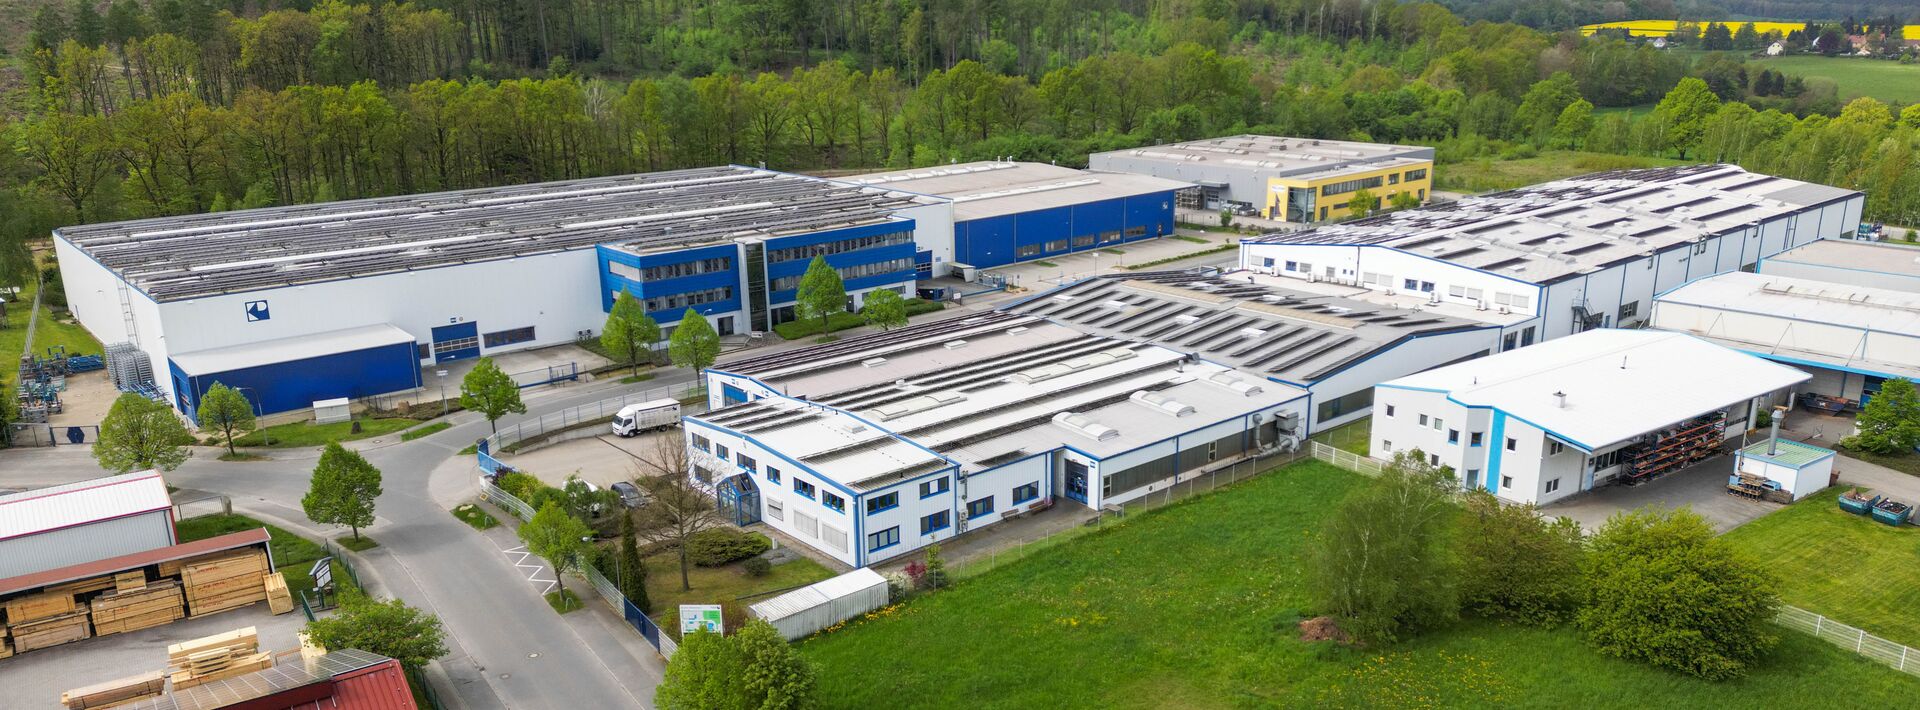 Käppler & Pausch GmbH - OEM Hersteller aus Neukirch Lausitz